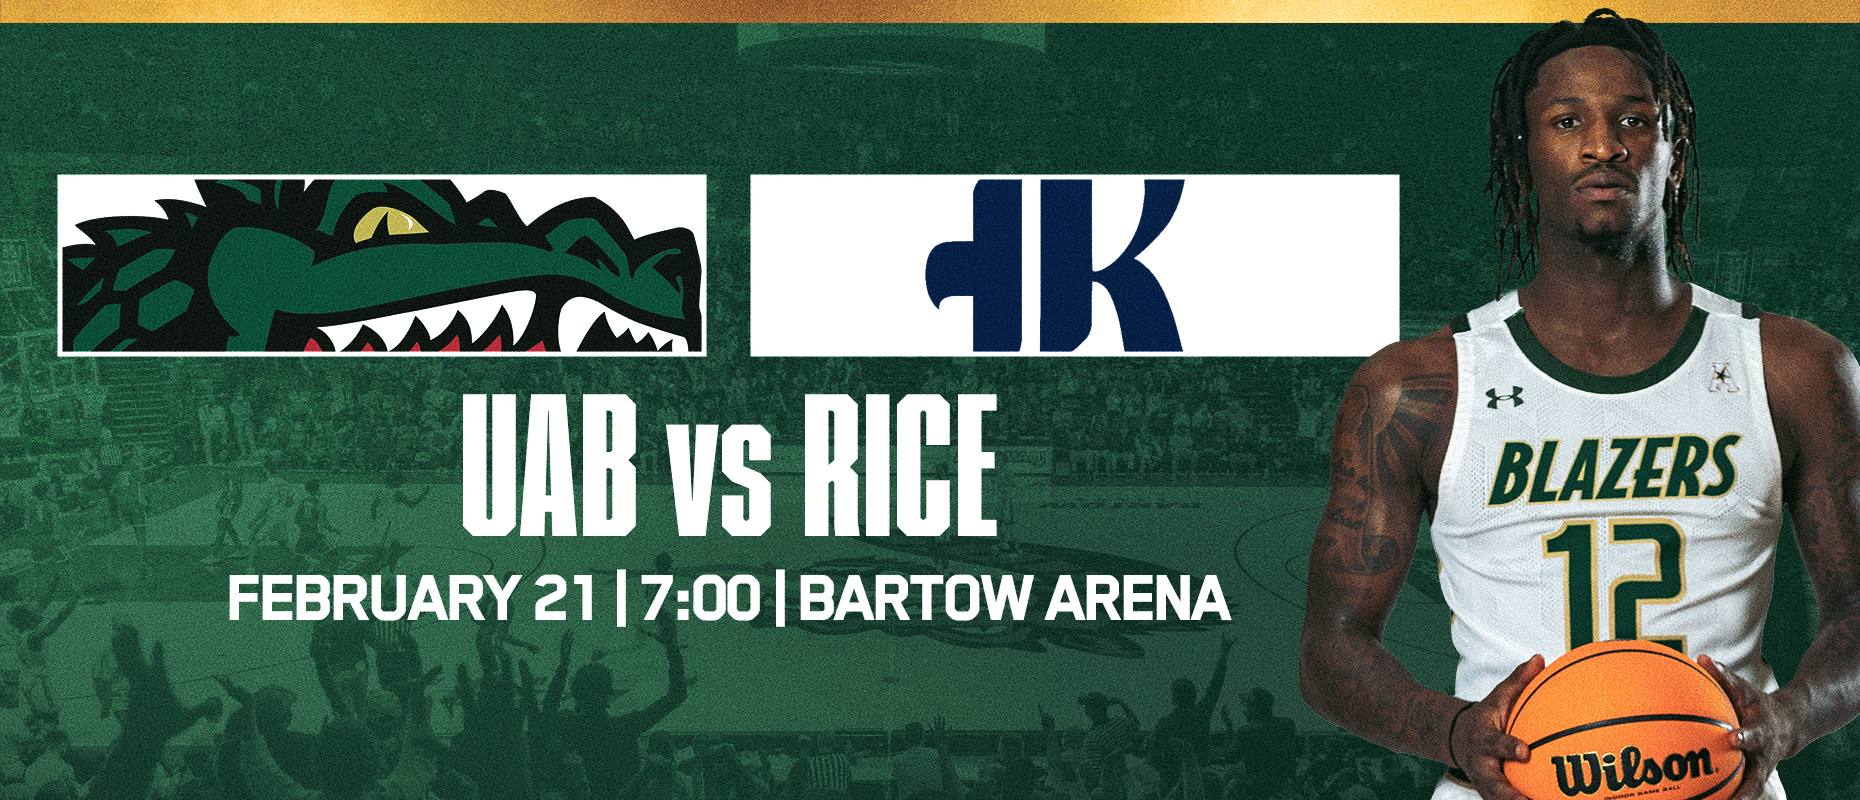 UAB Men's Basketball: Blazers vs Rice. February 21, 7:00pm at Bartow Arena.